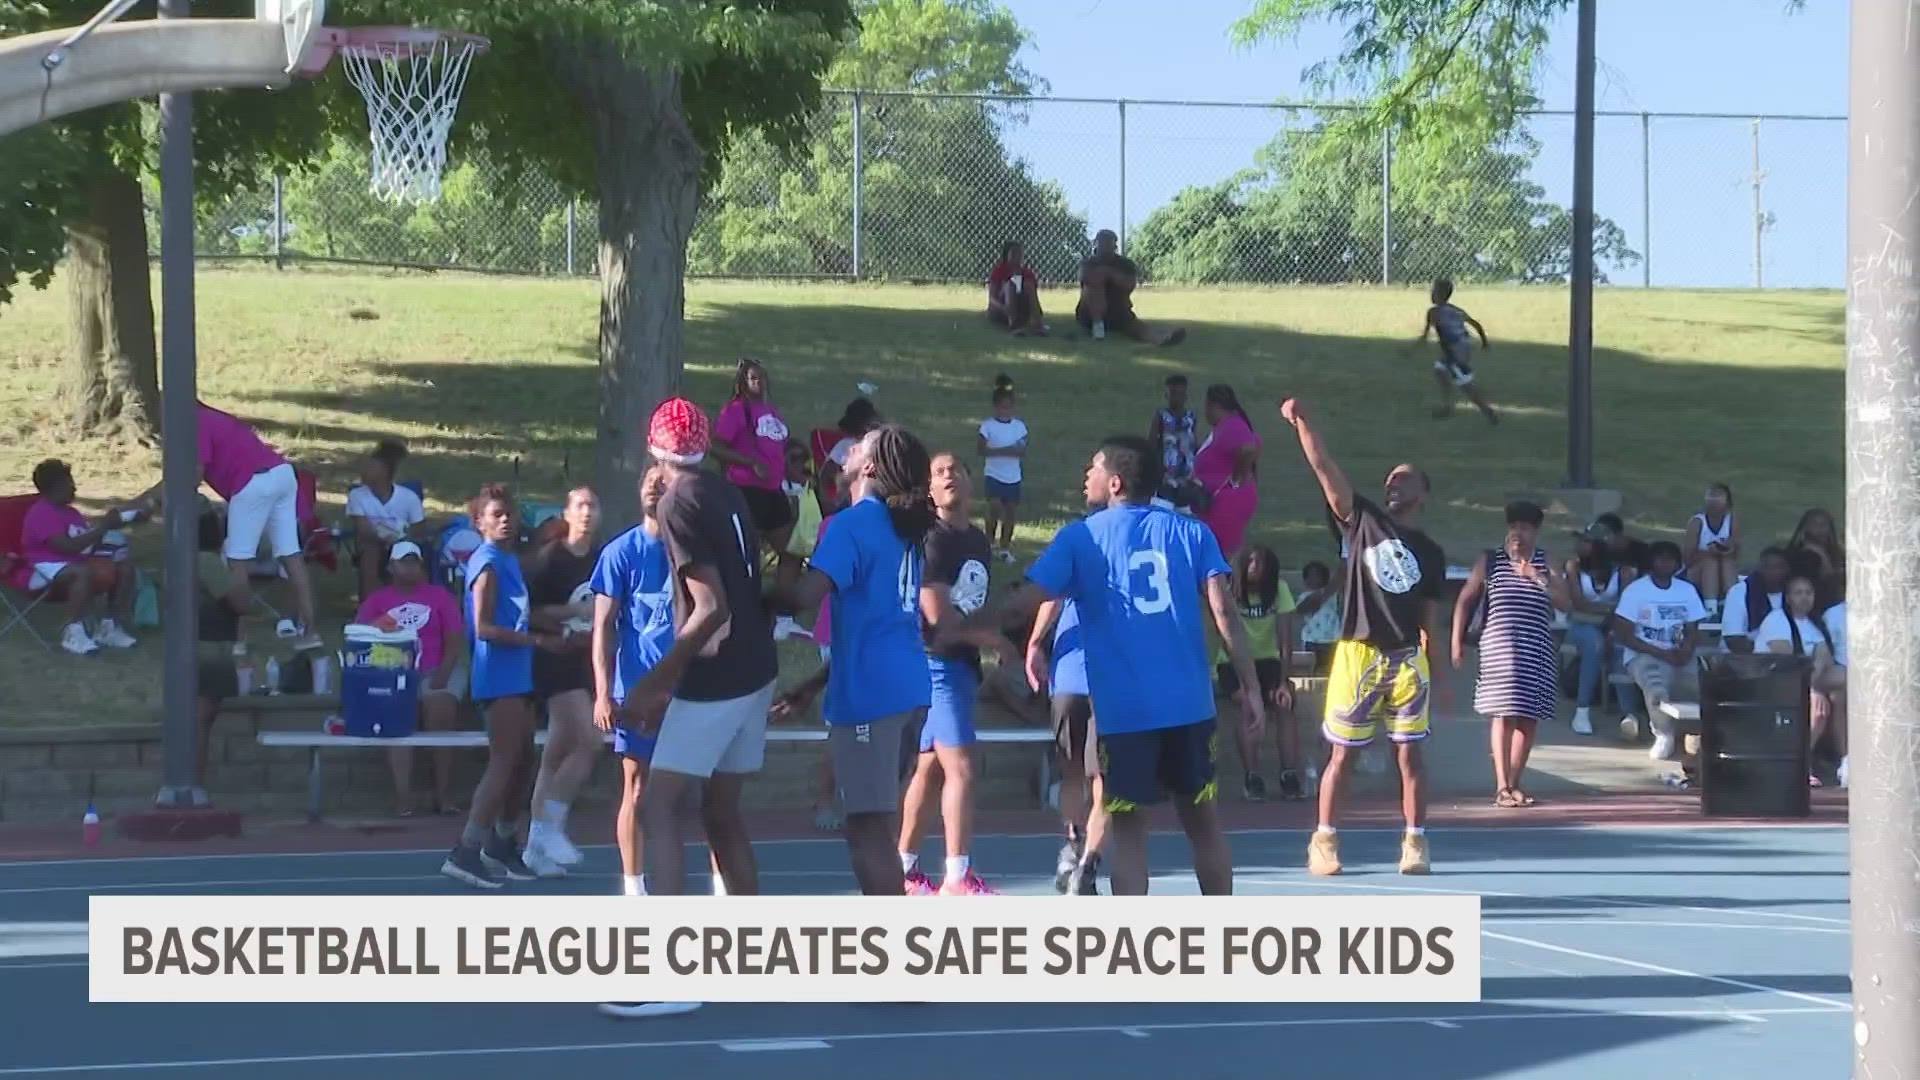 Grand Rapids basketball league creates safe space for kids